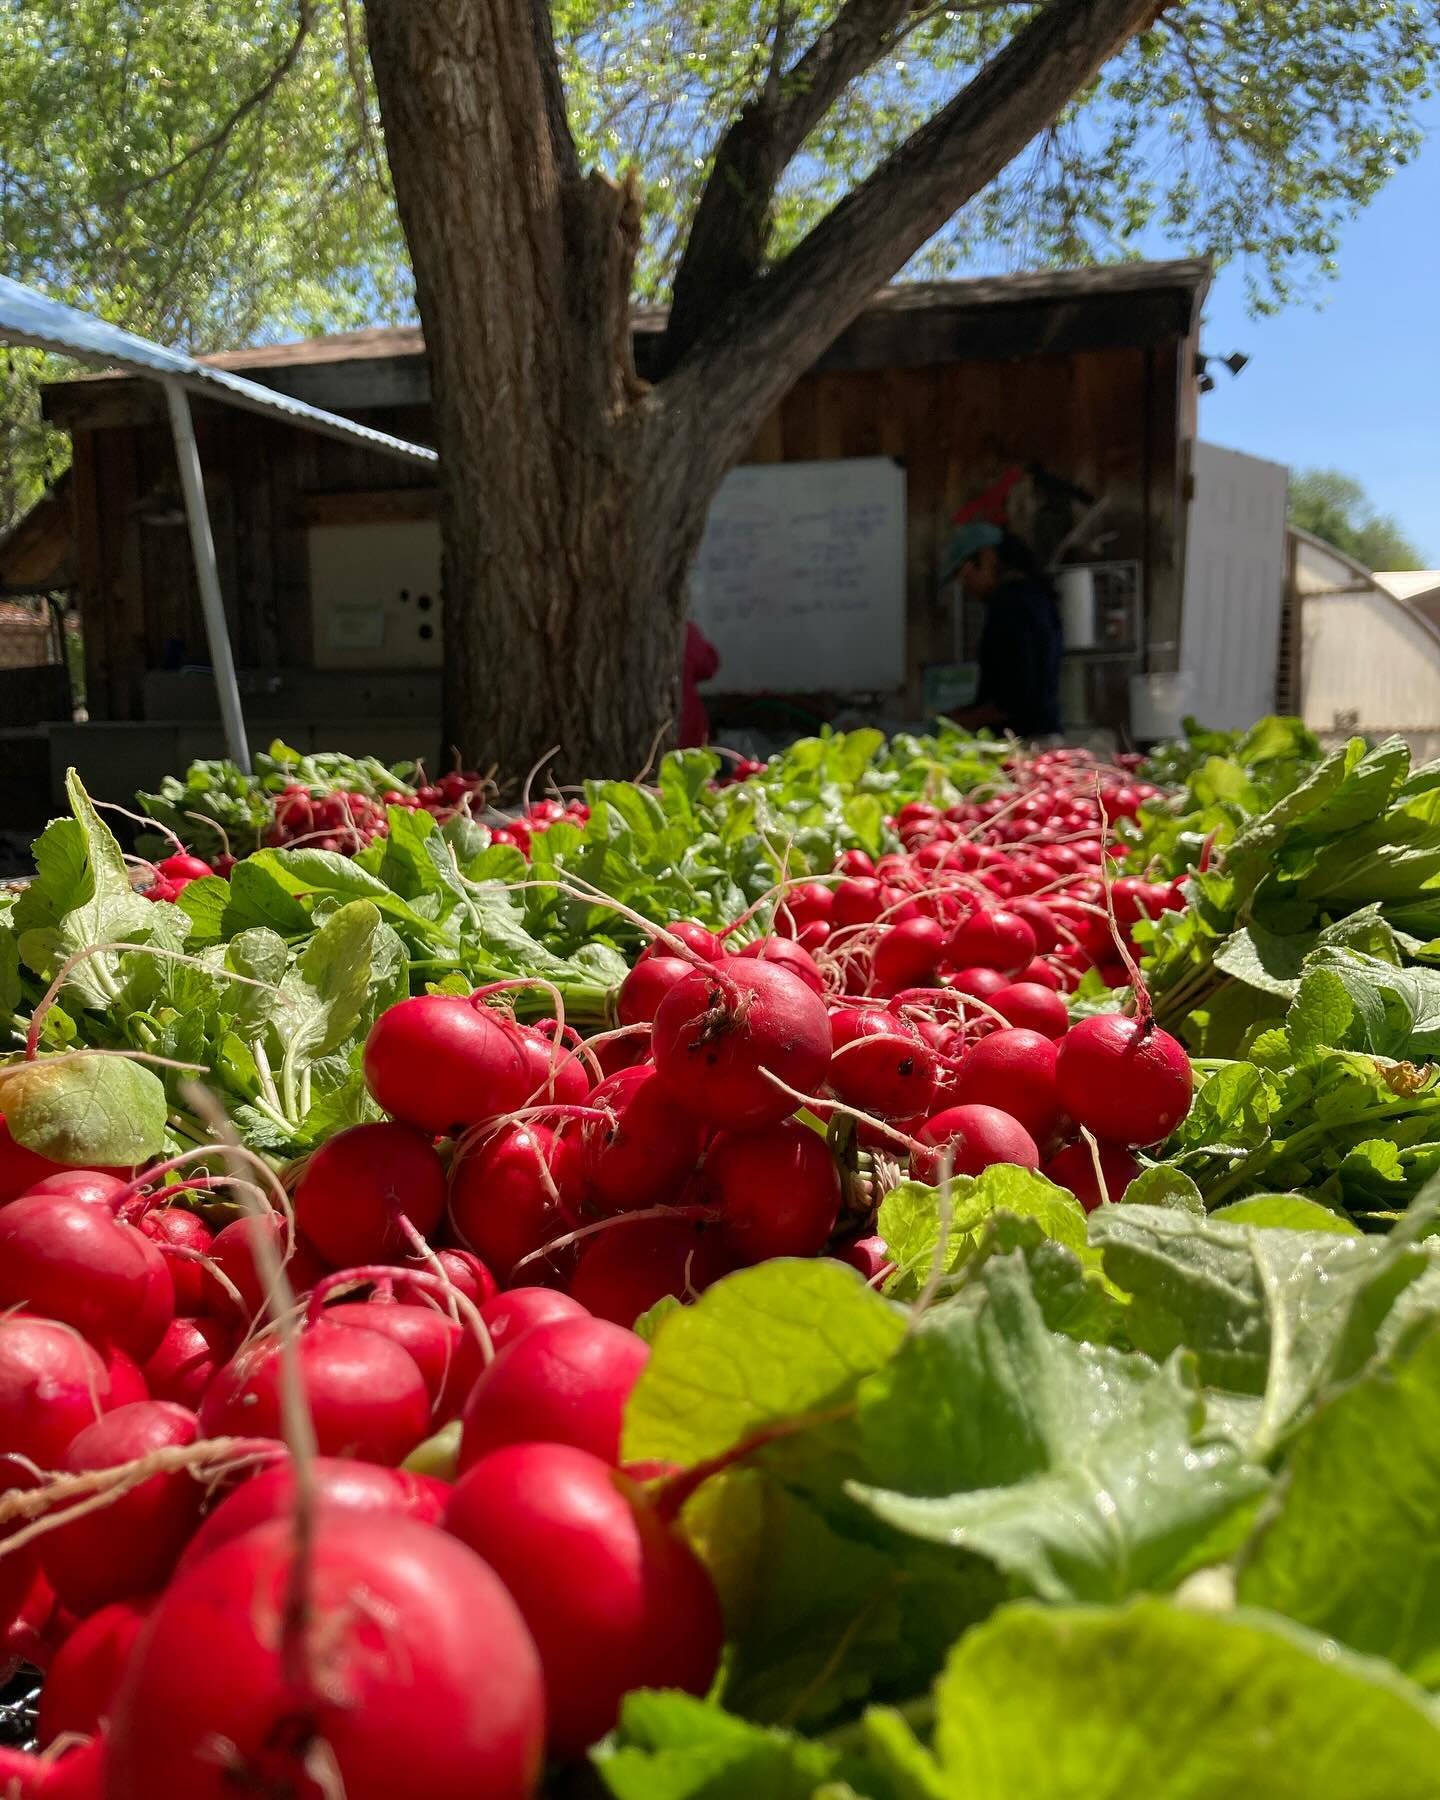 We&rsquo;re in the midst of radish season! What a beautiful bounty ❤️ 

#chispasfarm #radishseason #albuquerque #urbanfarm